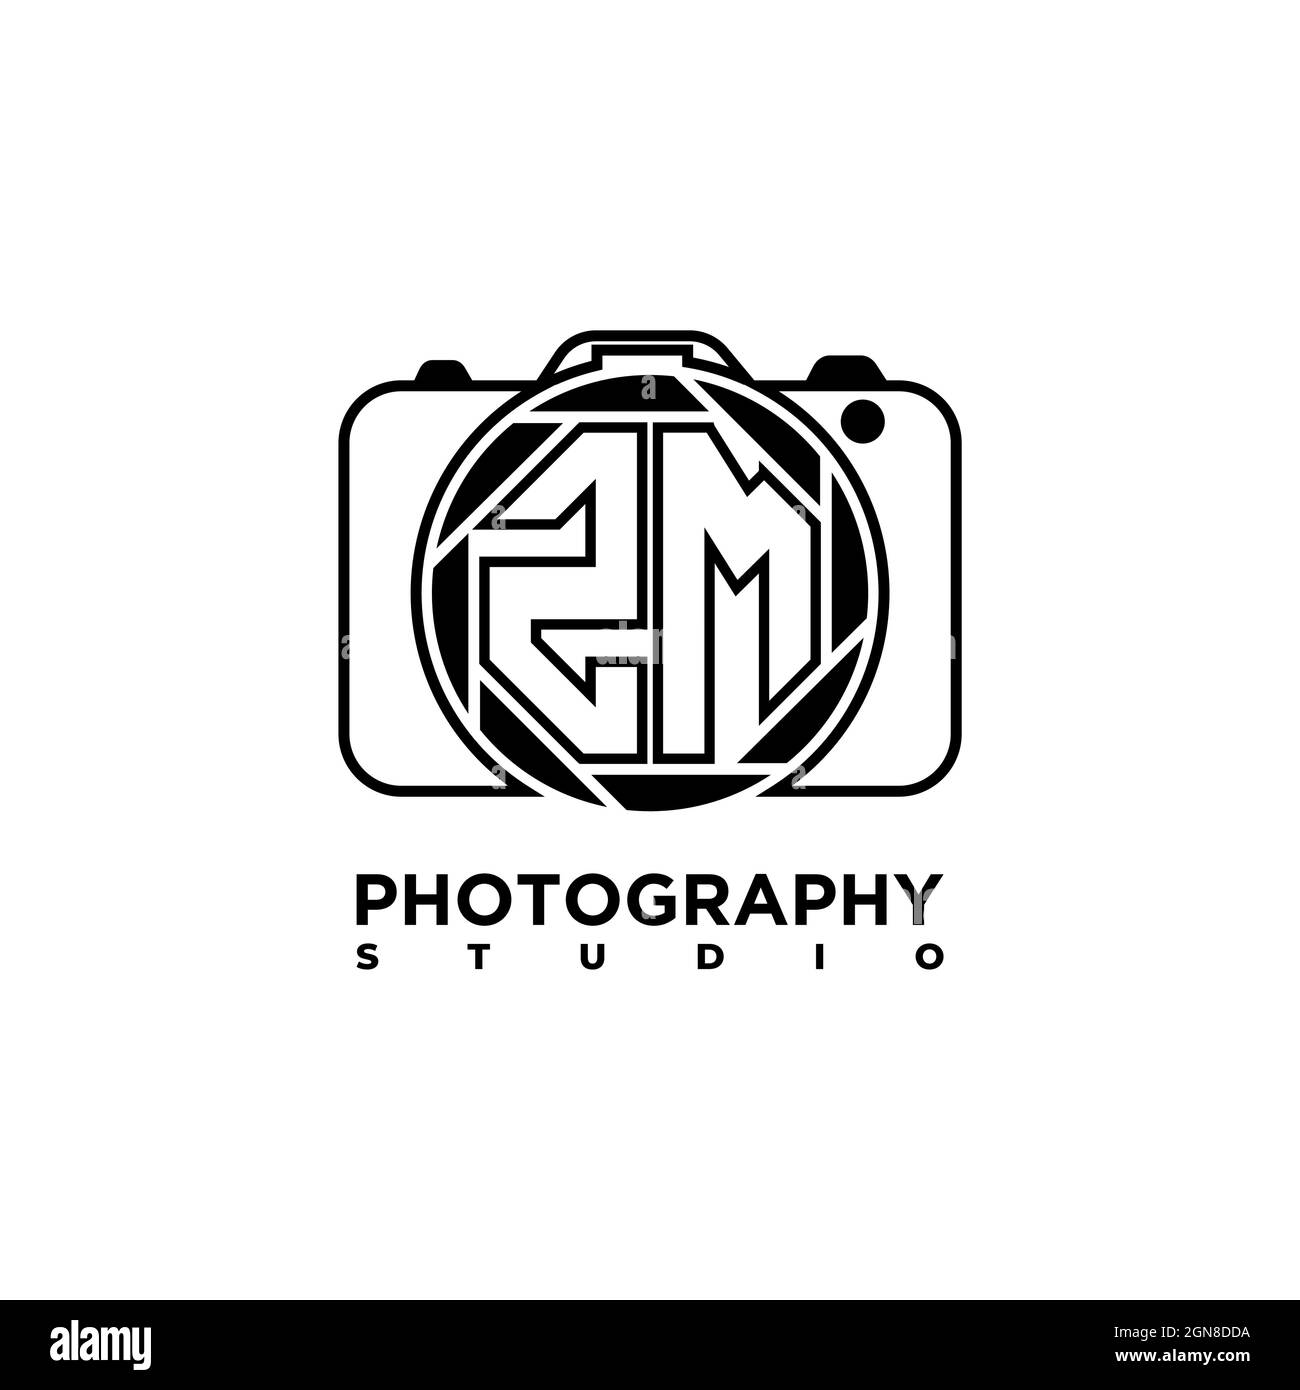 ZM Logo letter Geometric Photograph Camera shape style template vector Stock Vector